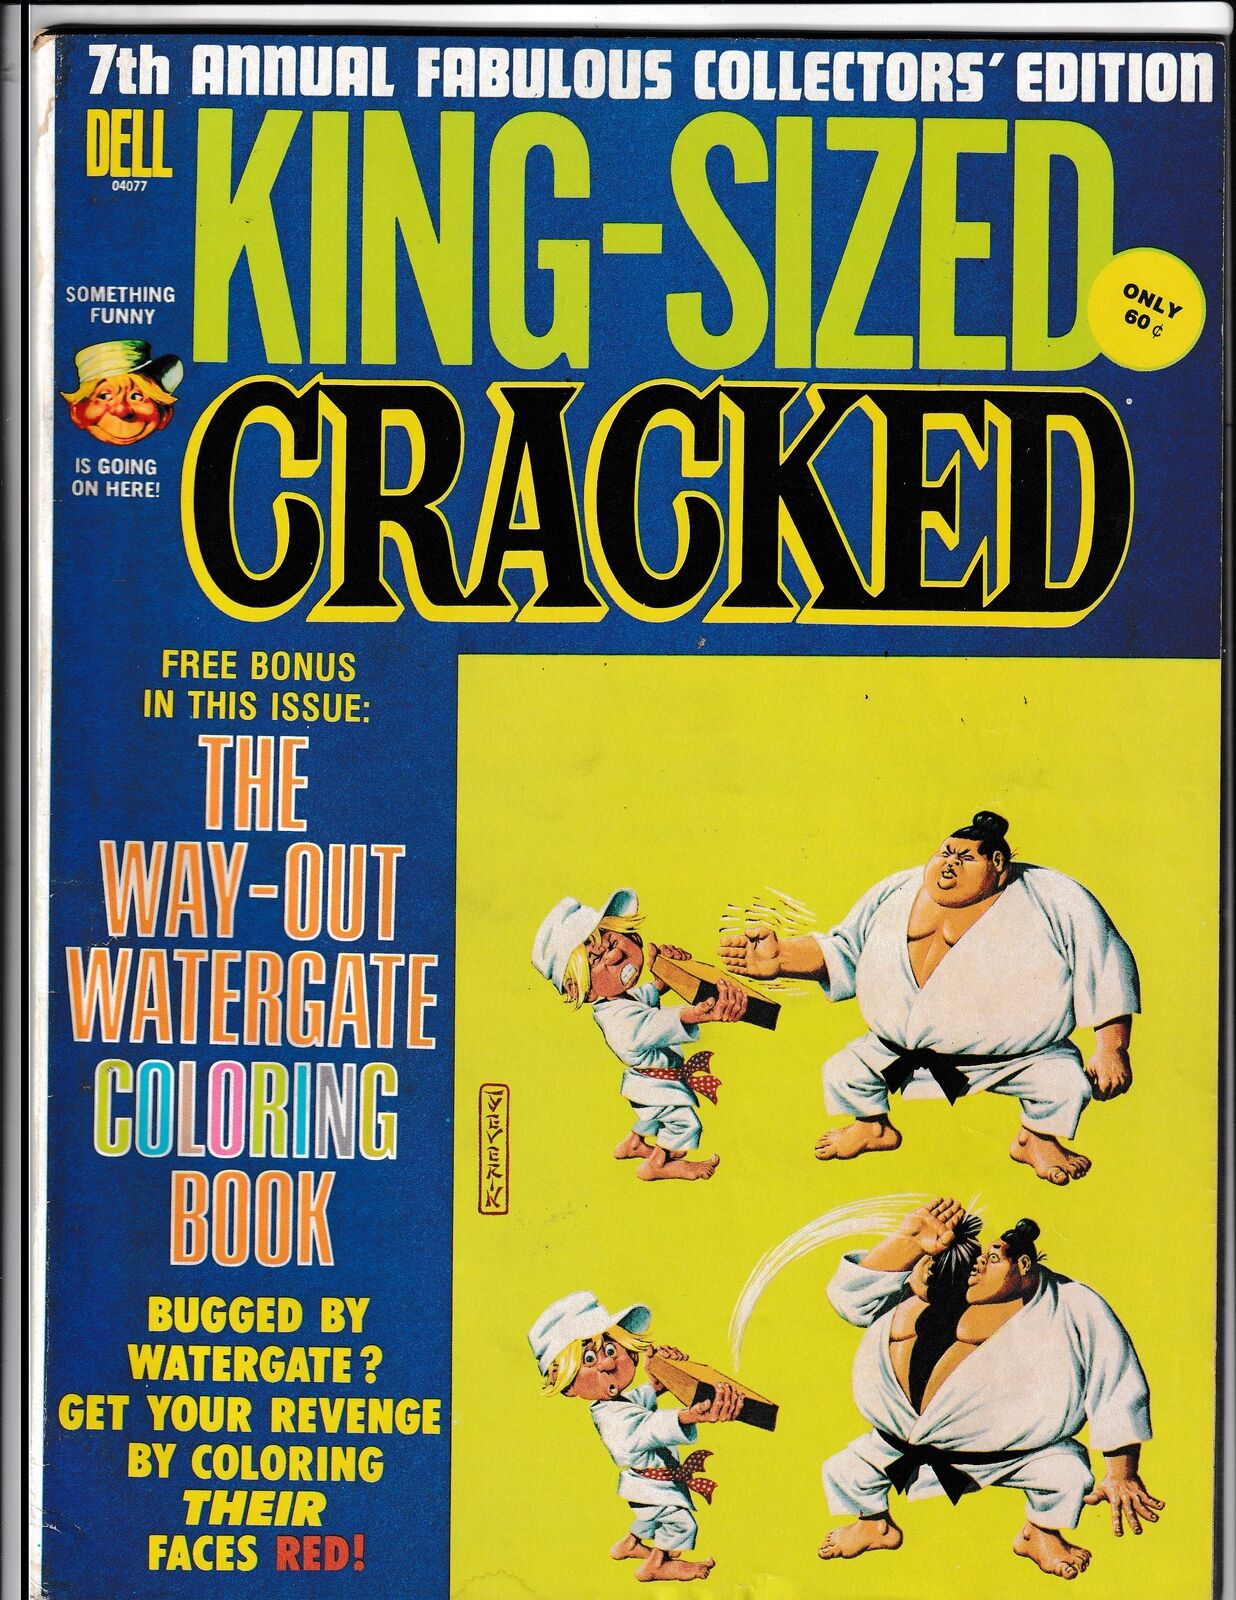 King-Sized Cracked #7 (1973) Major Comics